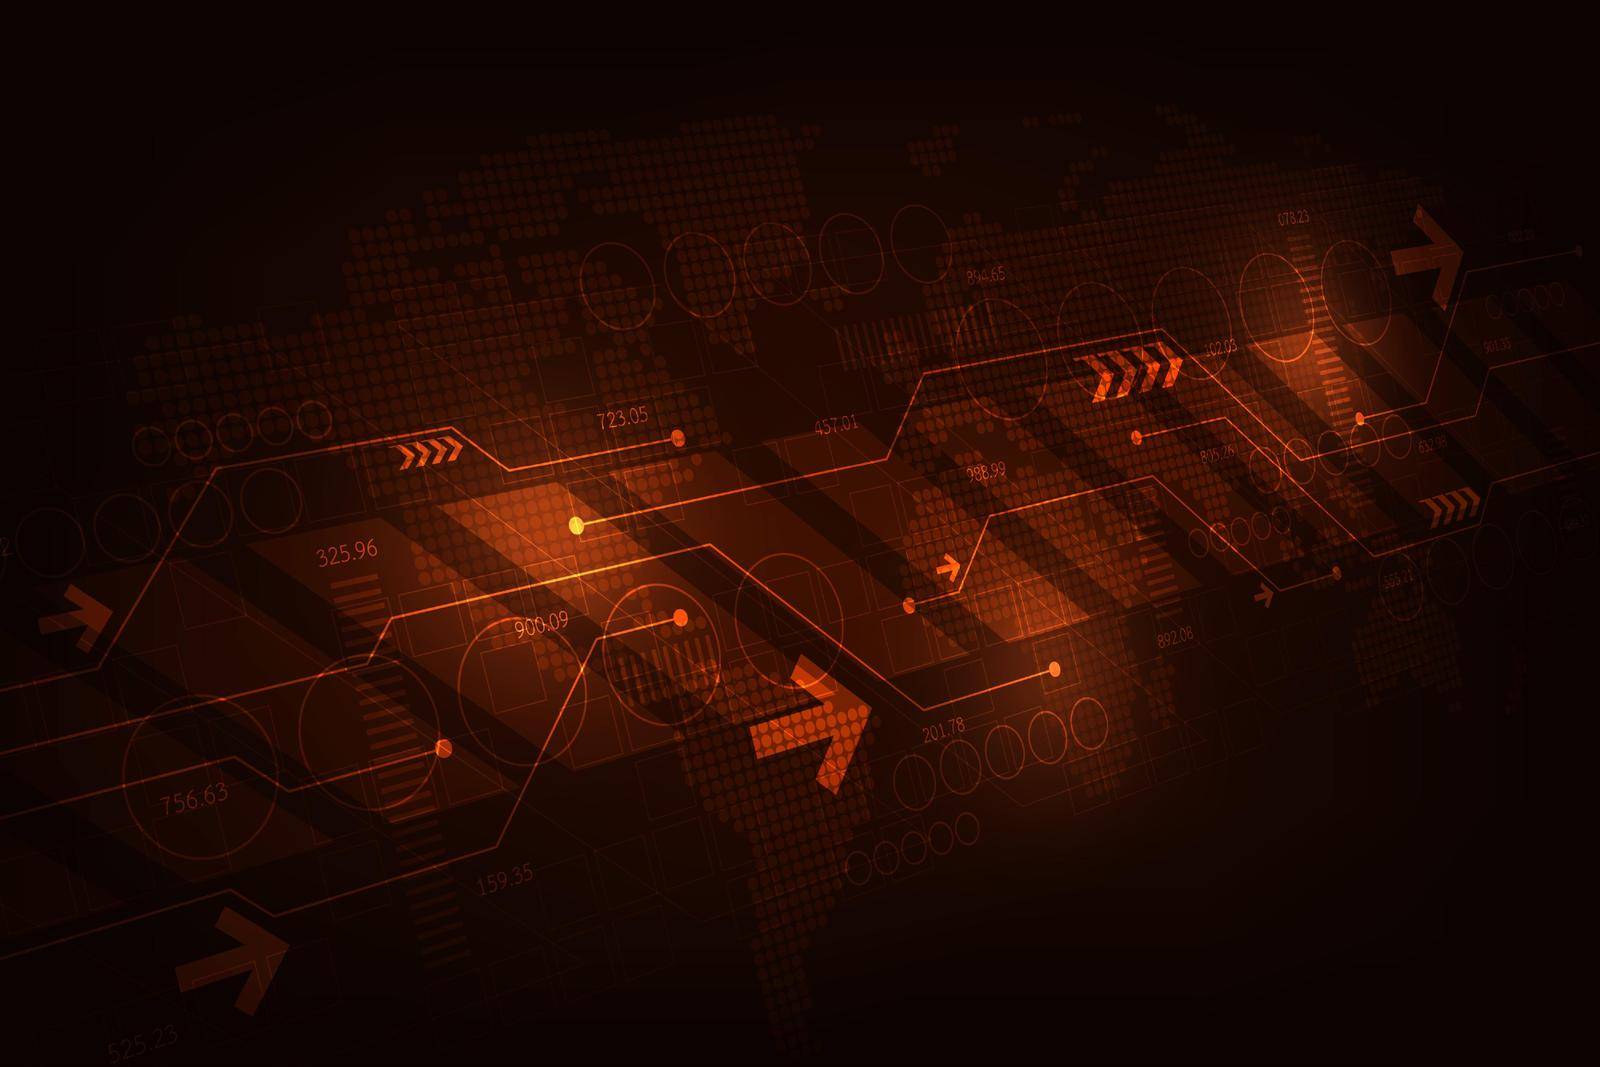 Digital transfer operation system on a dark orange background.